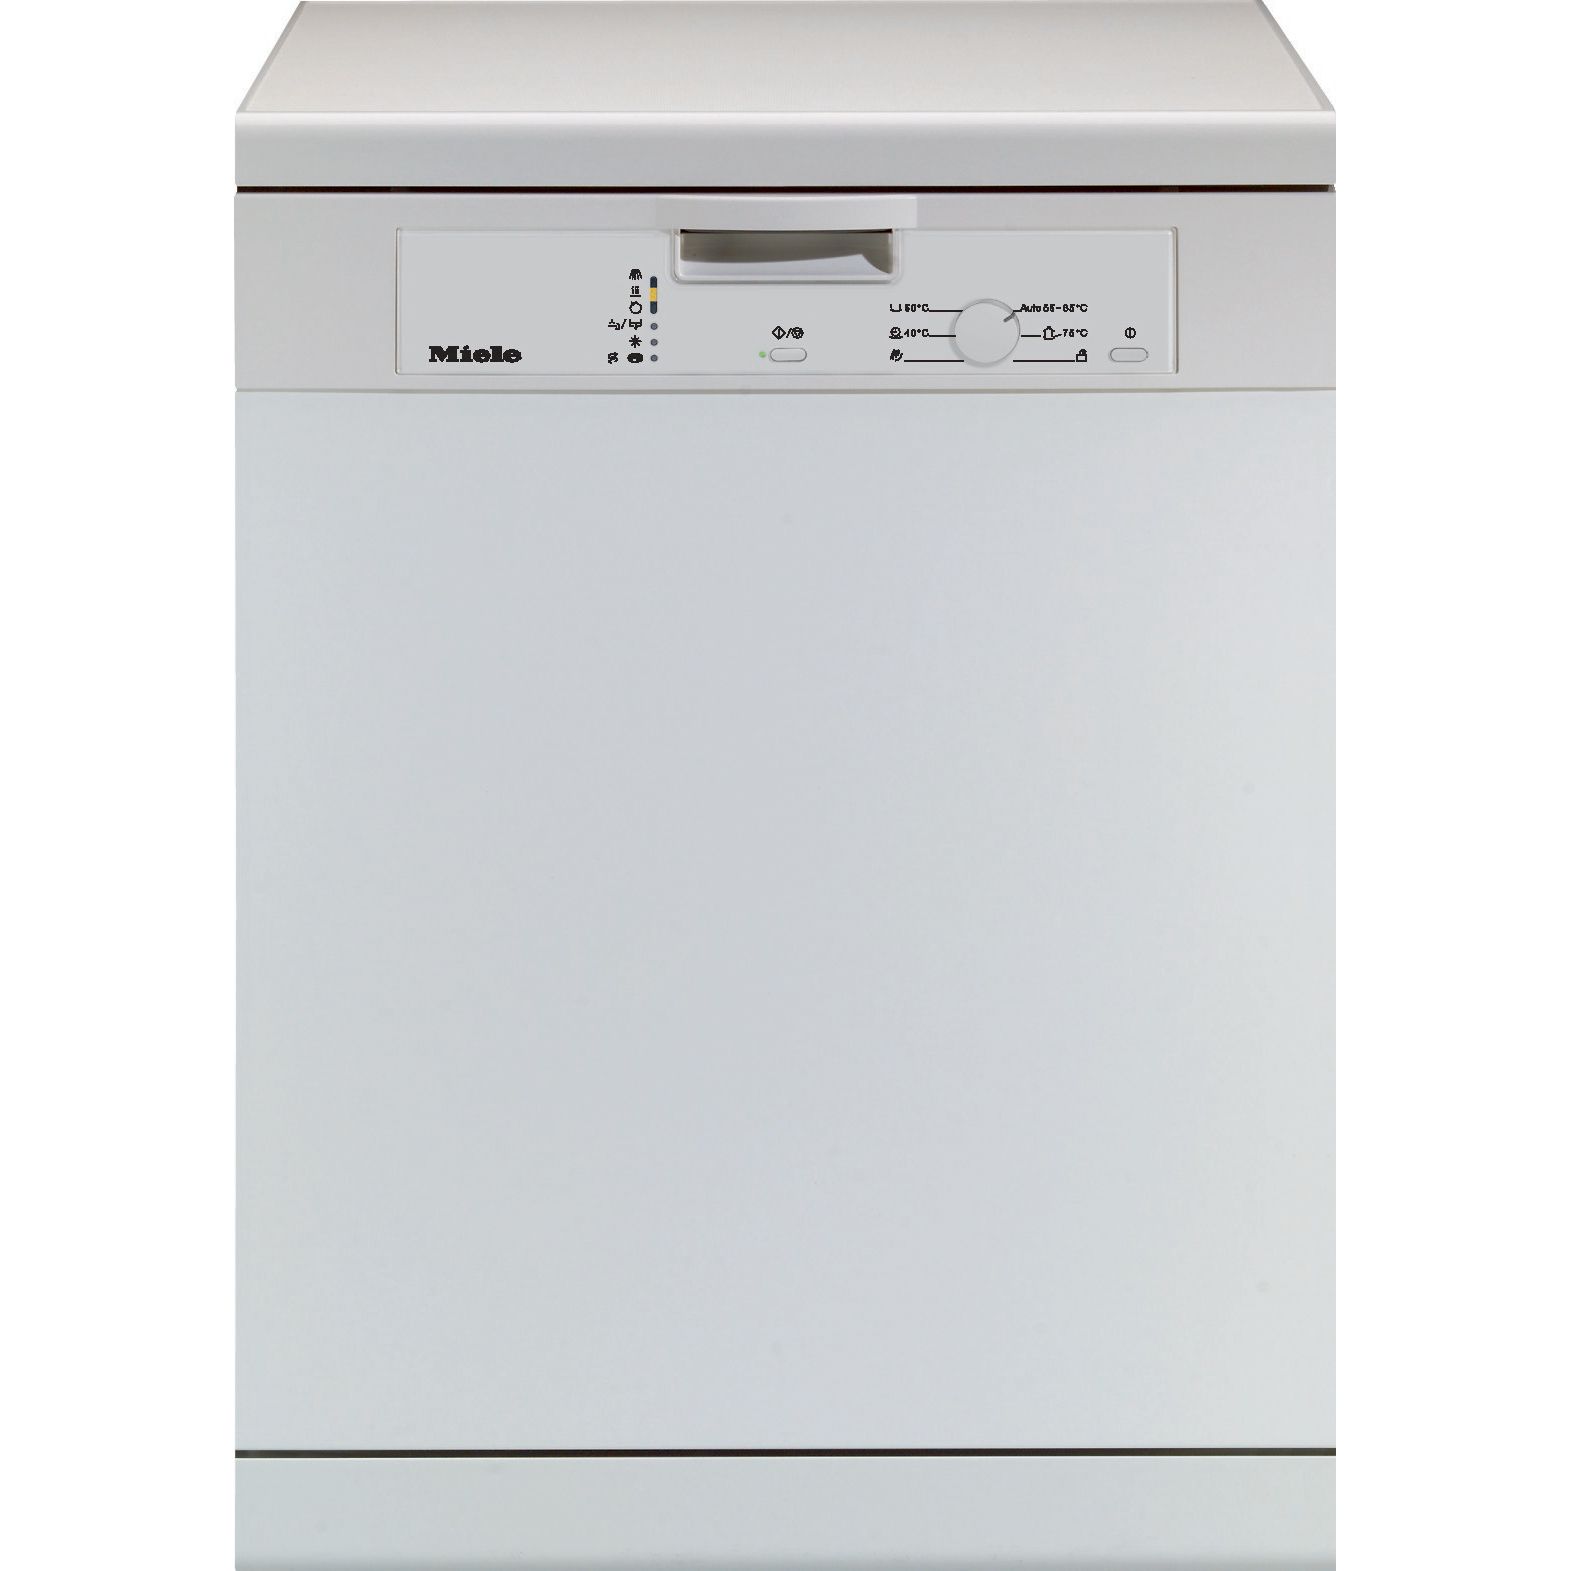 Miele G1022i Semi-Integrated Dishwasher, White at John Lewis